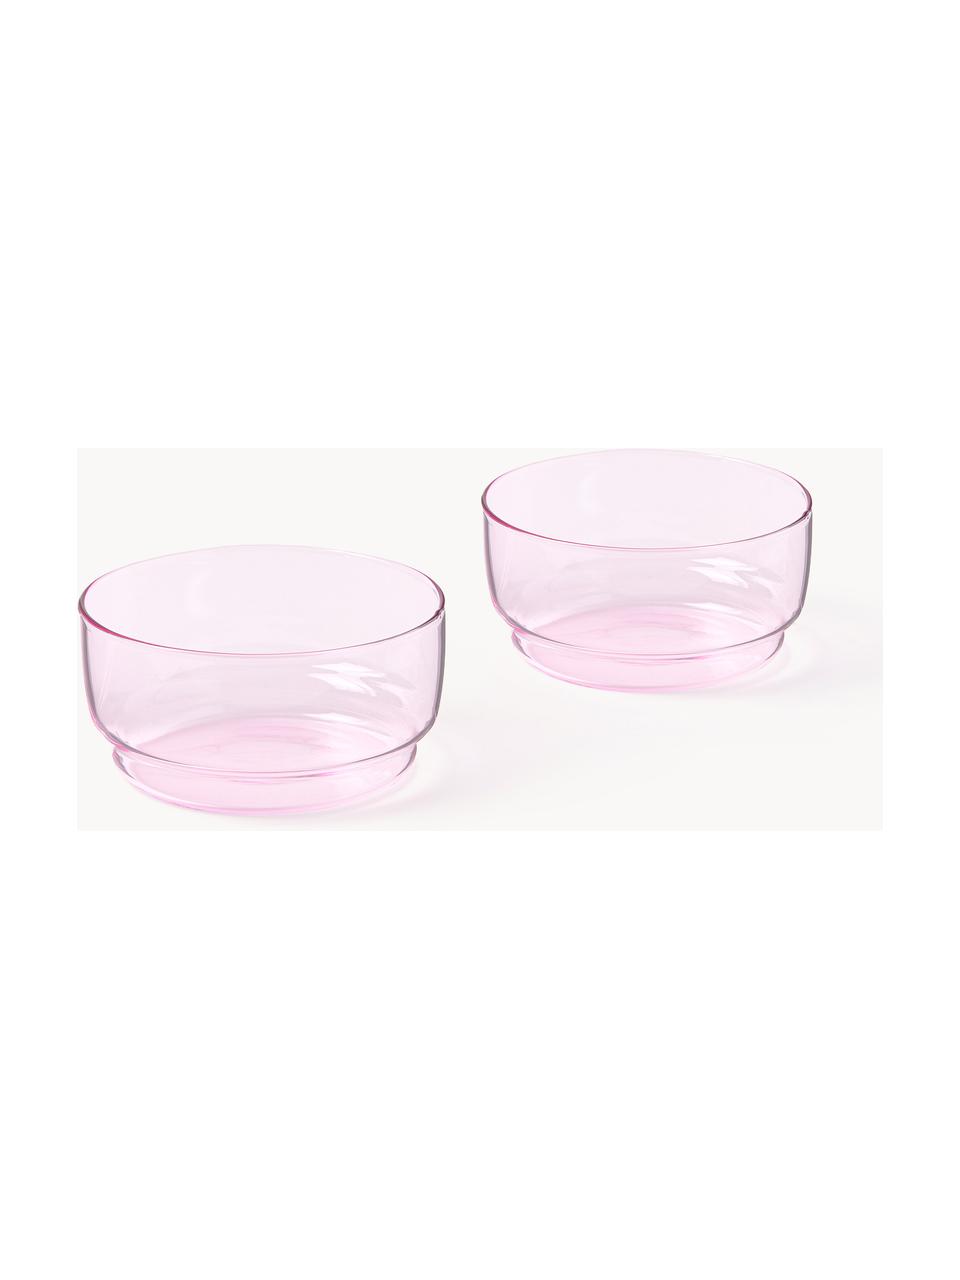 Schalen Torino uit borosilicaatglas, 2 stuks, Borosilicaatglas, Lichtroze, transparant, Ø 12 x H 6 cm